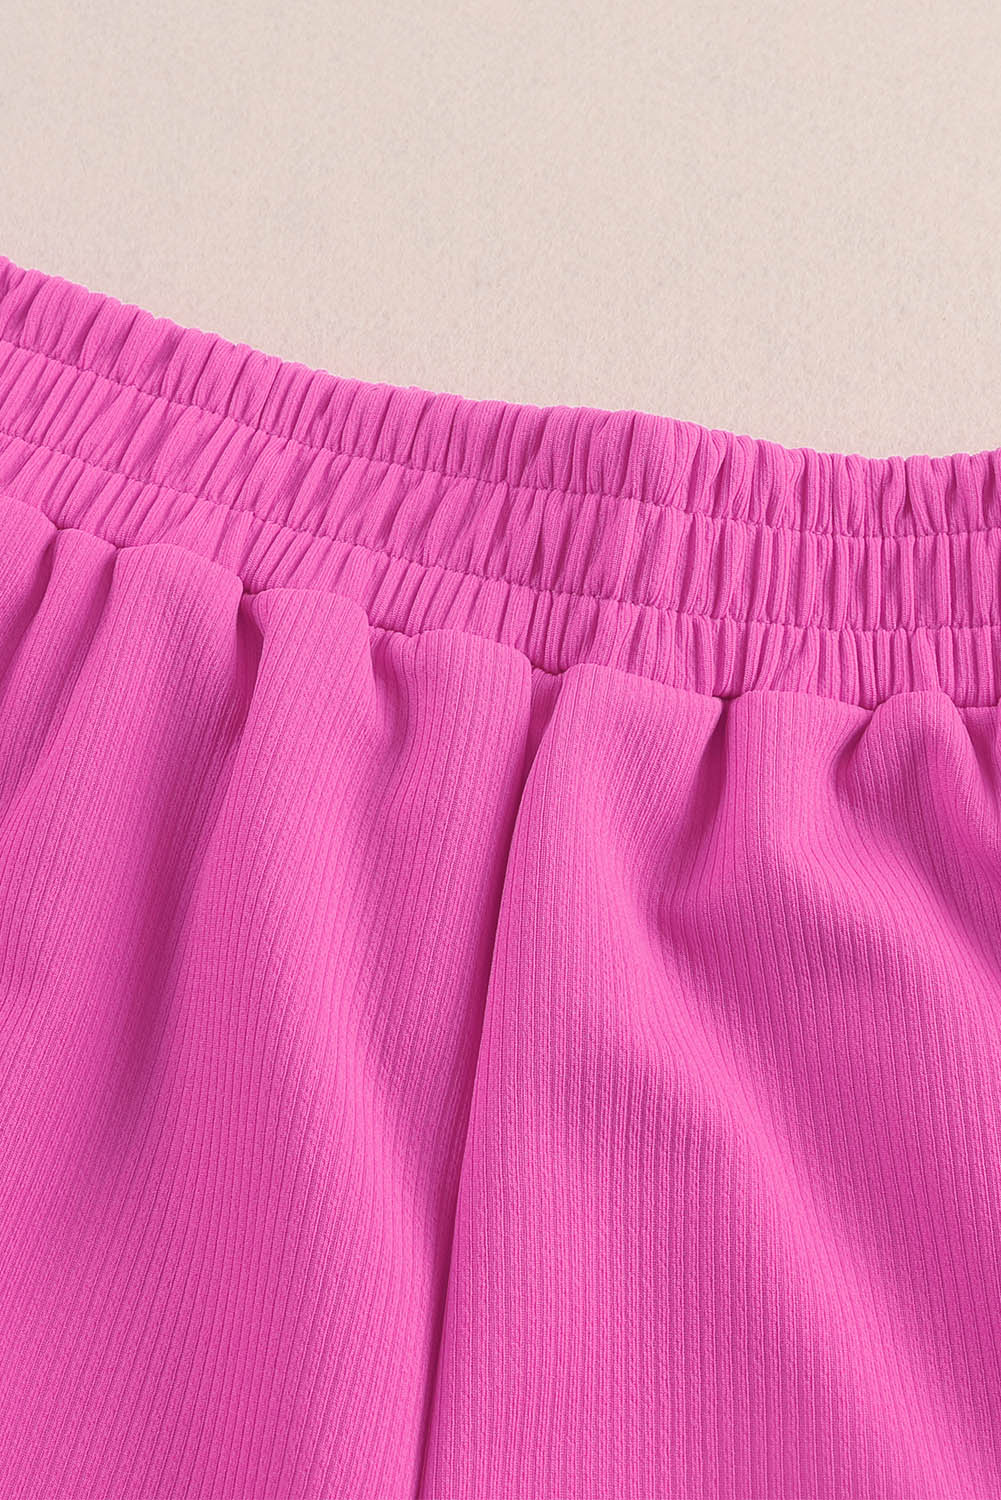 Rose Rib Knitted Sleeveless Crop Top and Elastic Waist Shorts Set